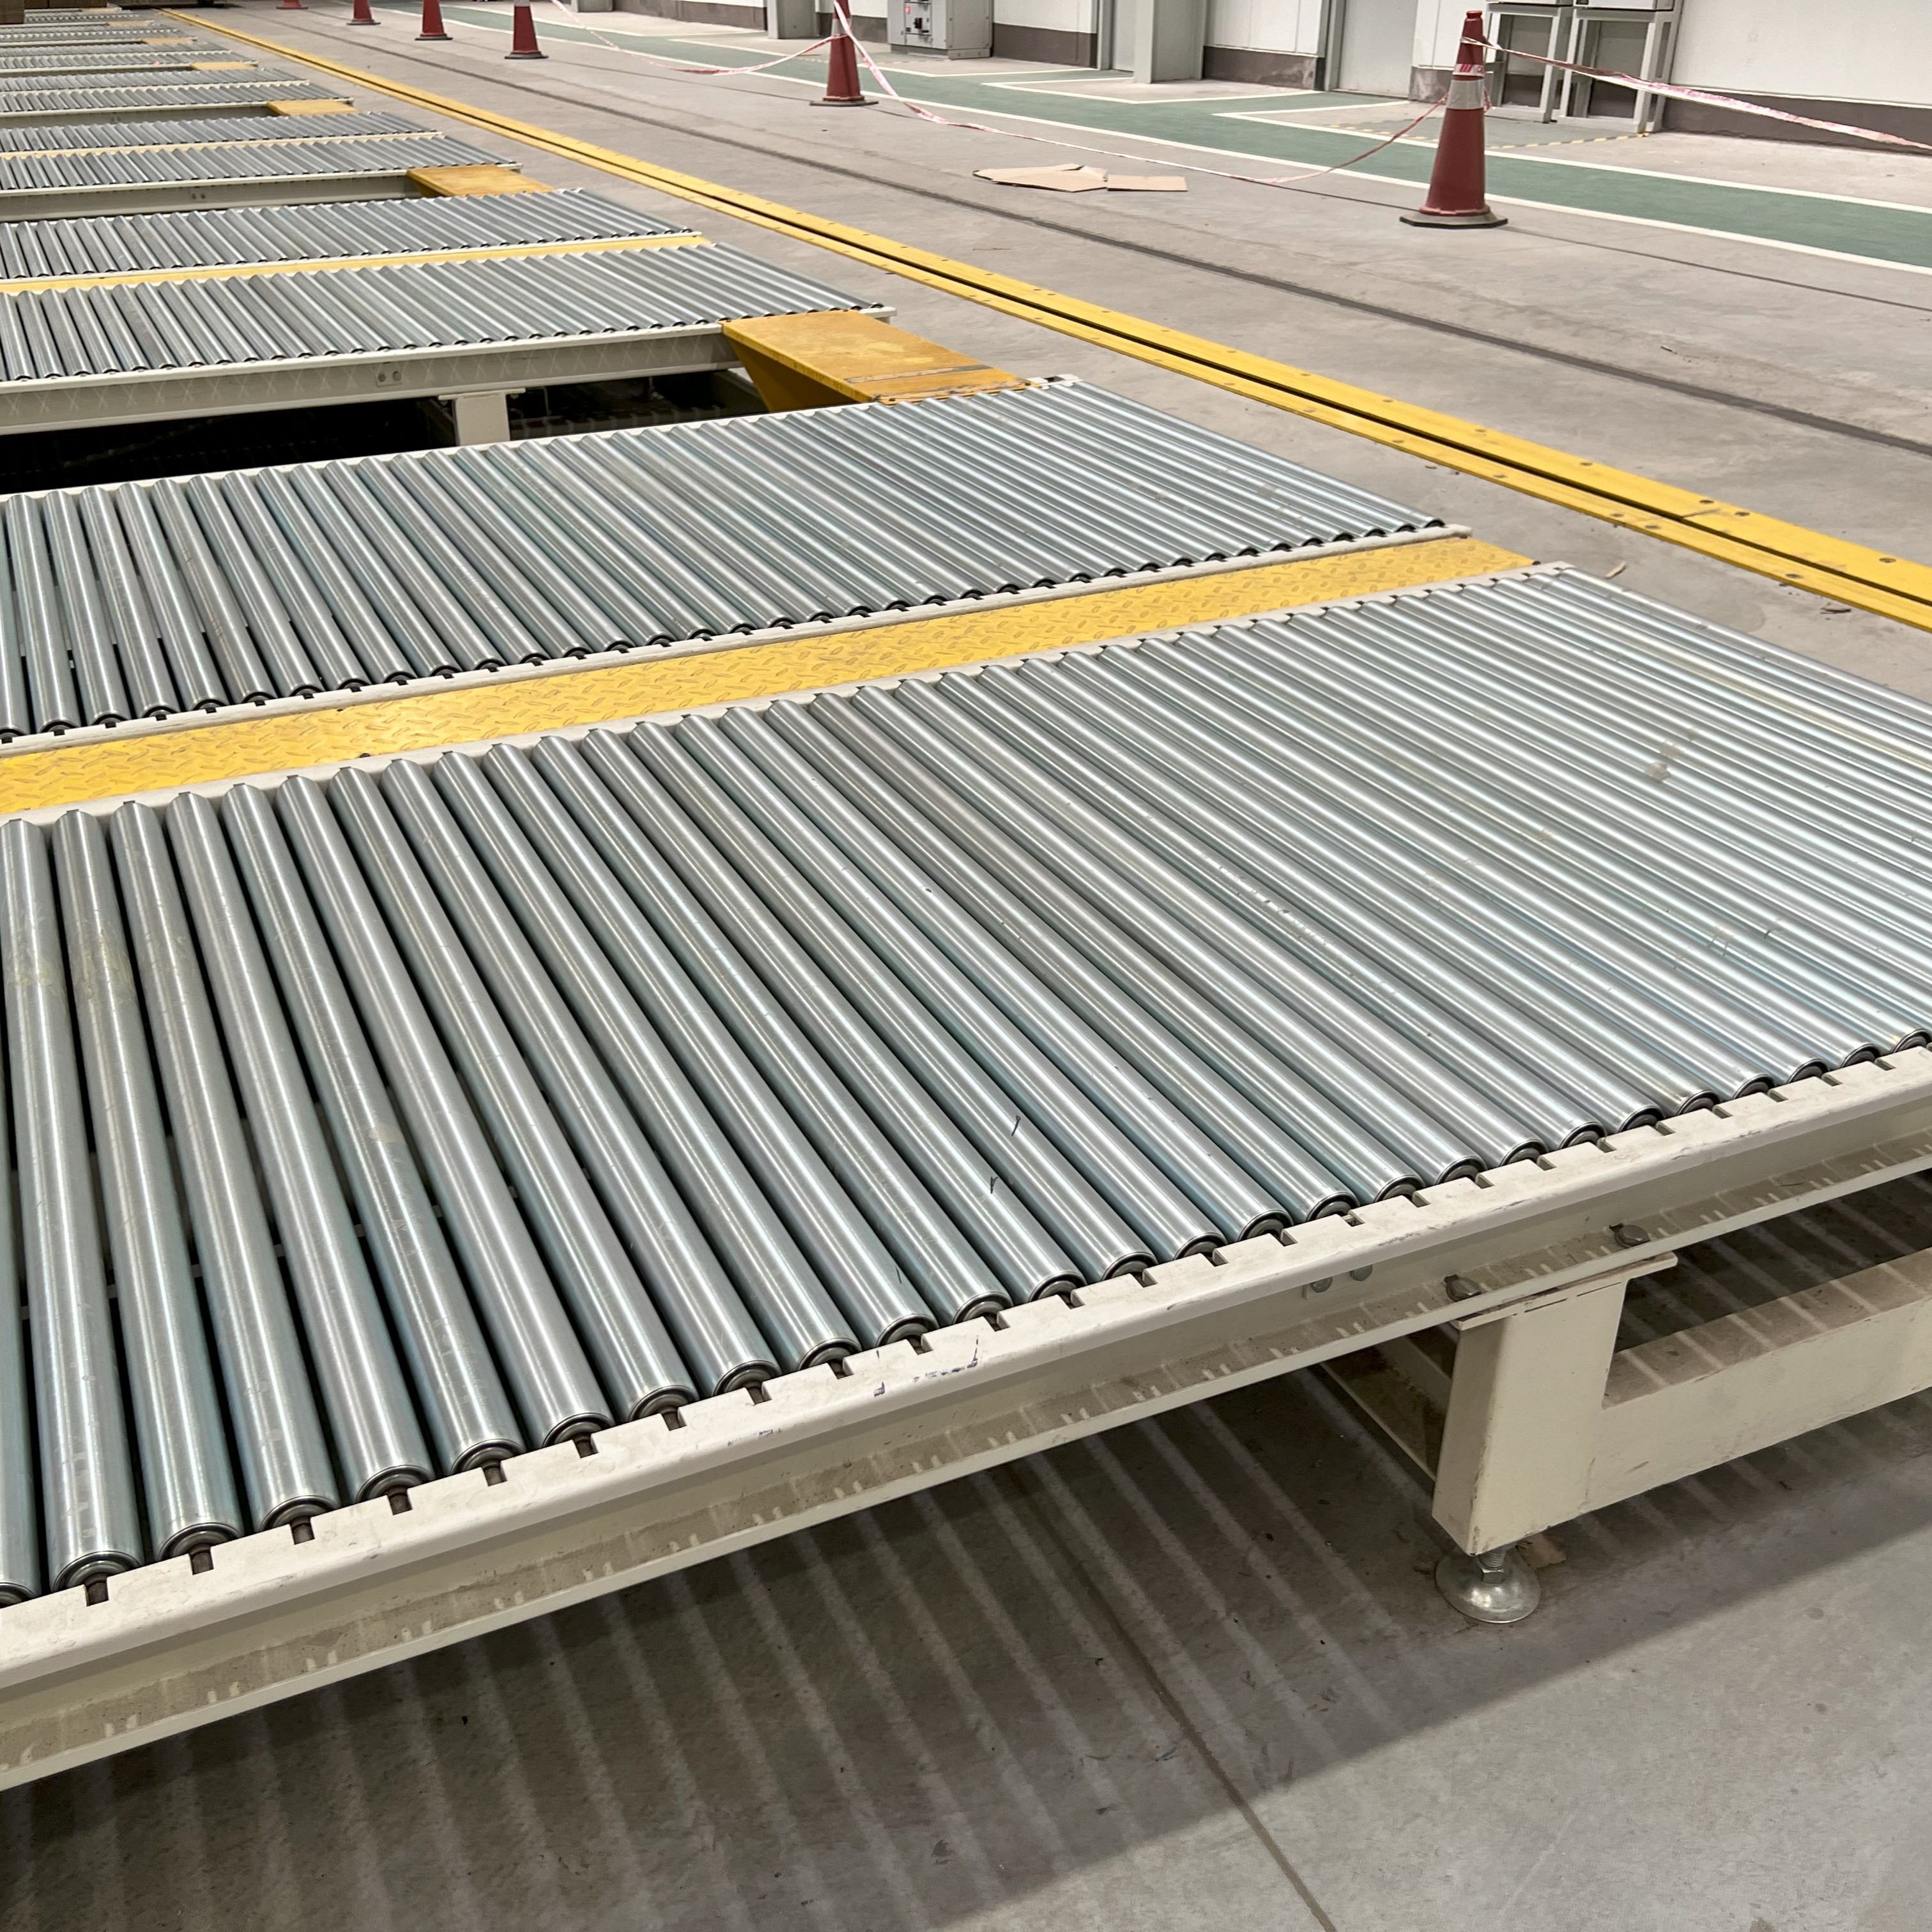 Roller Conveyor systems